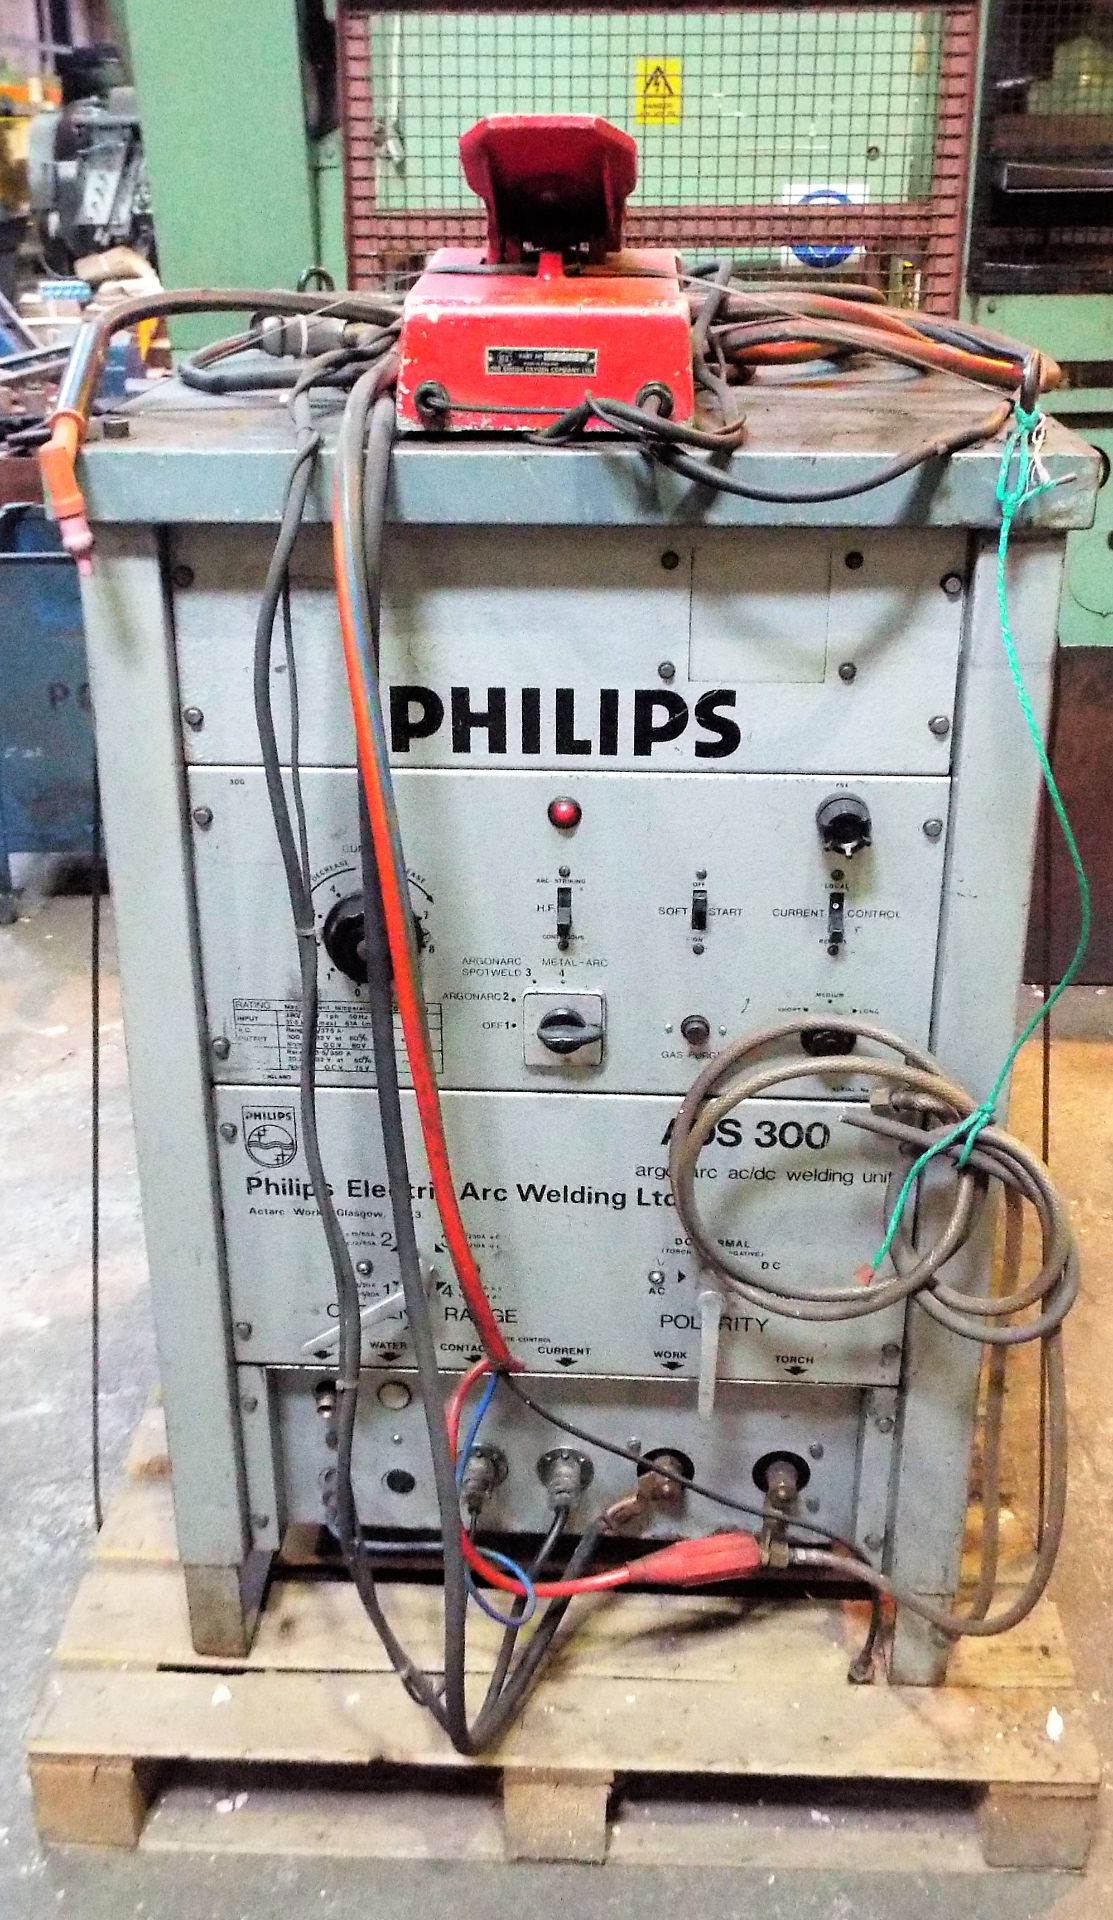 Philips ADS300 Argonarc AC/DC Welding Unit.